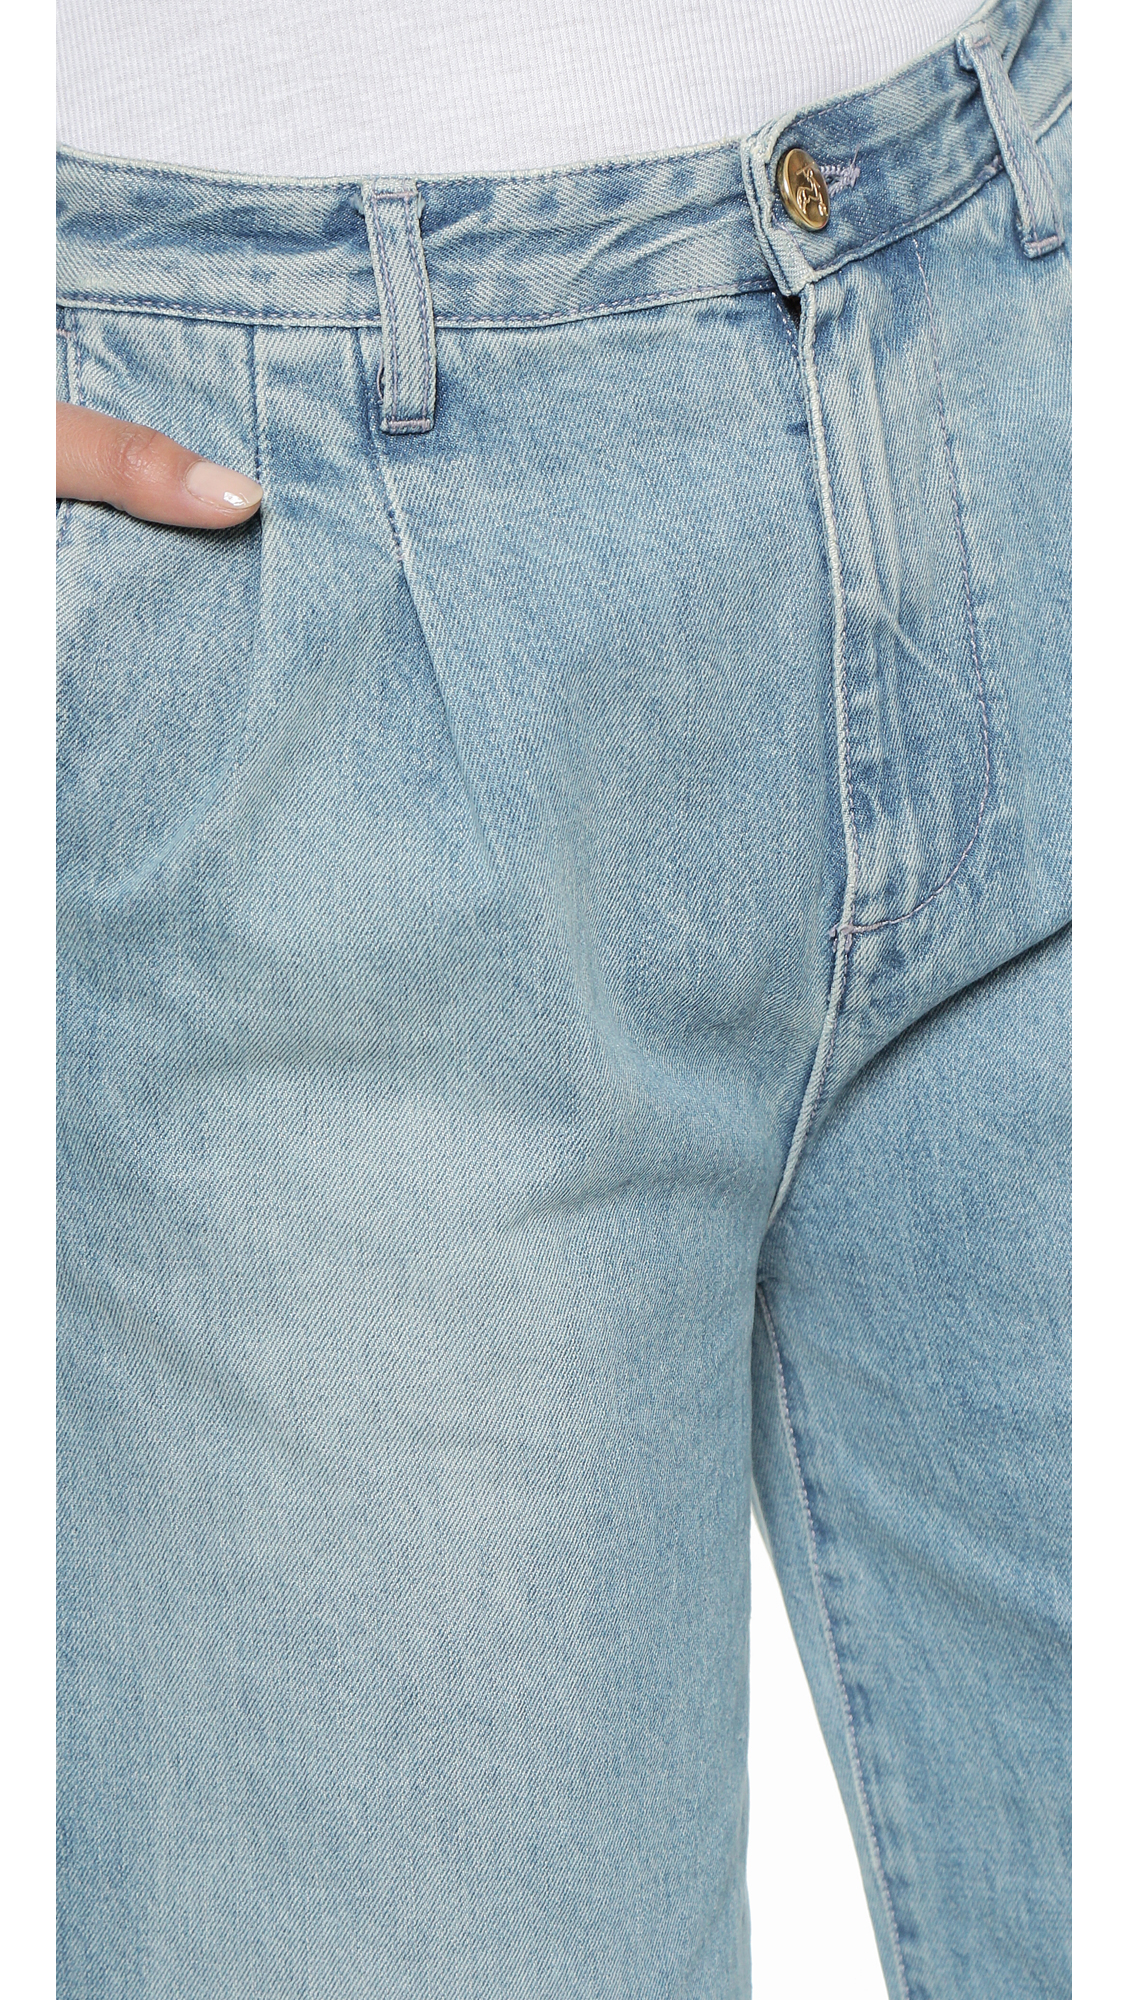 Rodebjer Denim Mina Jeans - Washed Indigo in Blue - Lyst